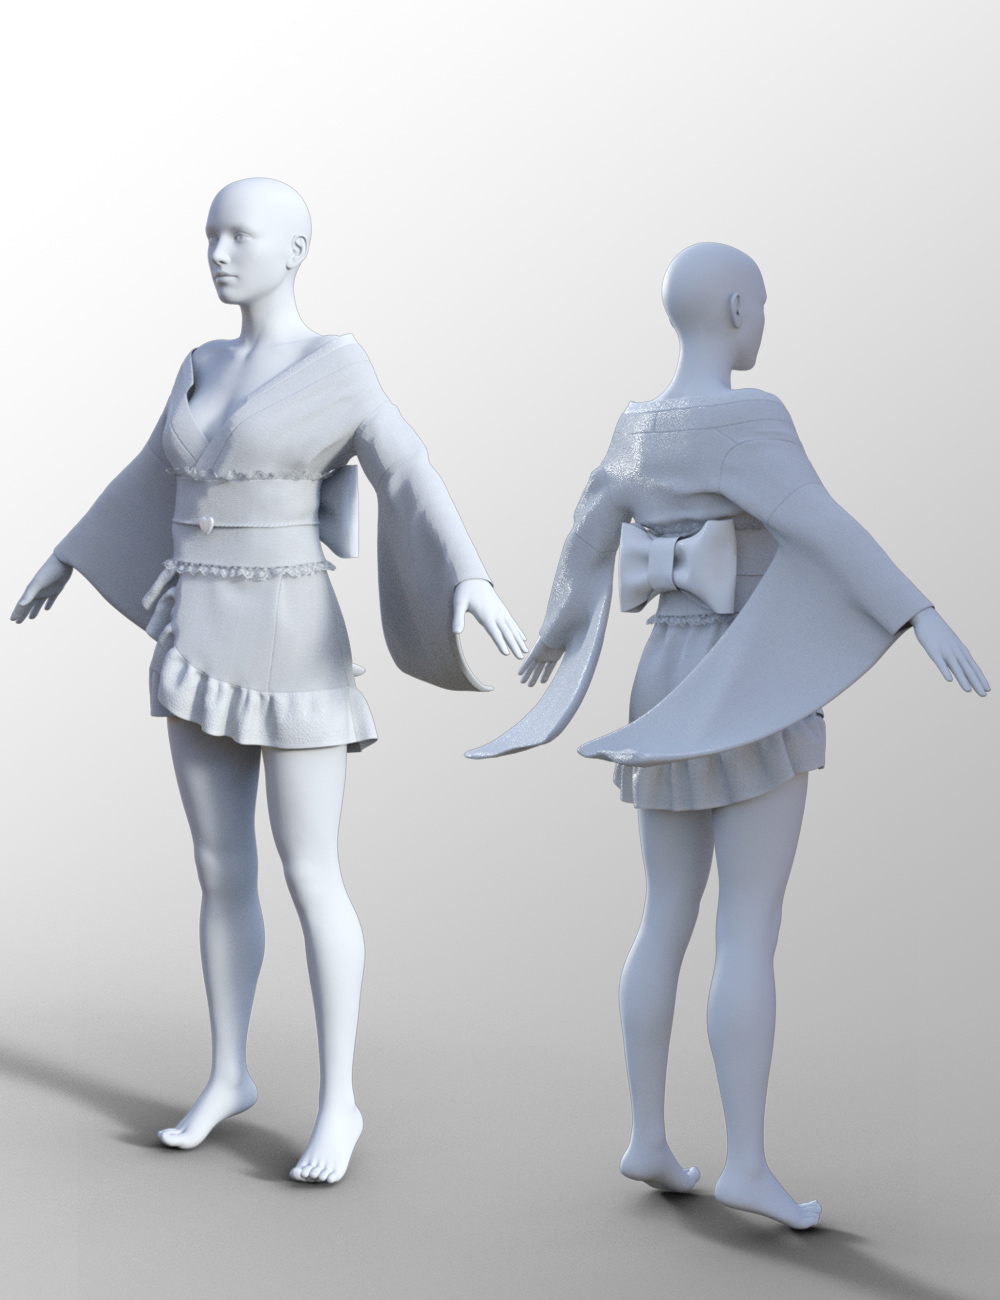 dForce Pretty Kimono for Genesis 8 Females by: kobamax, 3D Models by Daz 3D